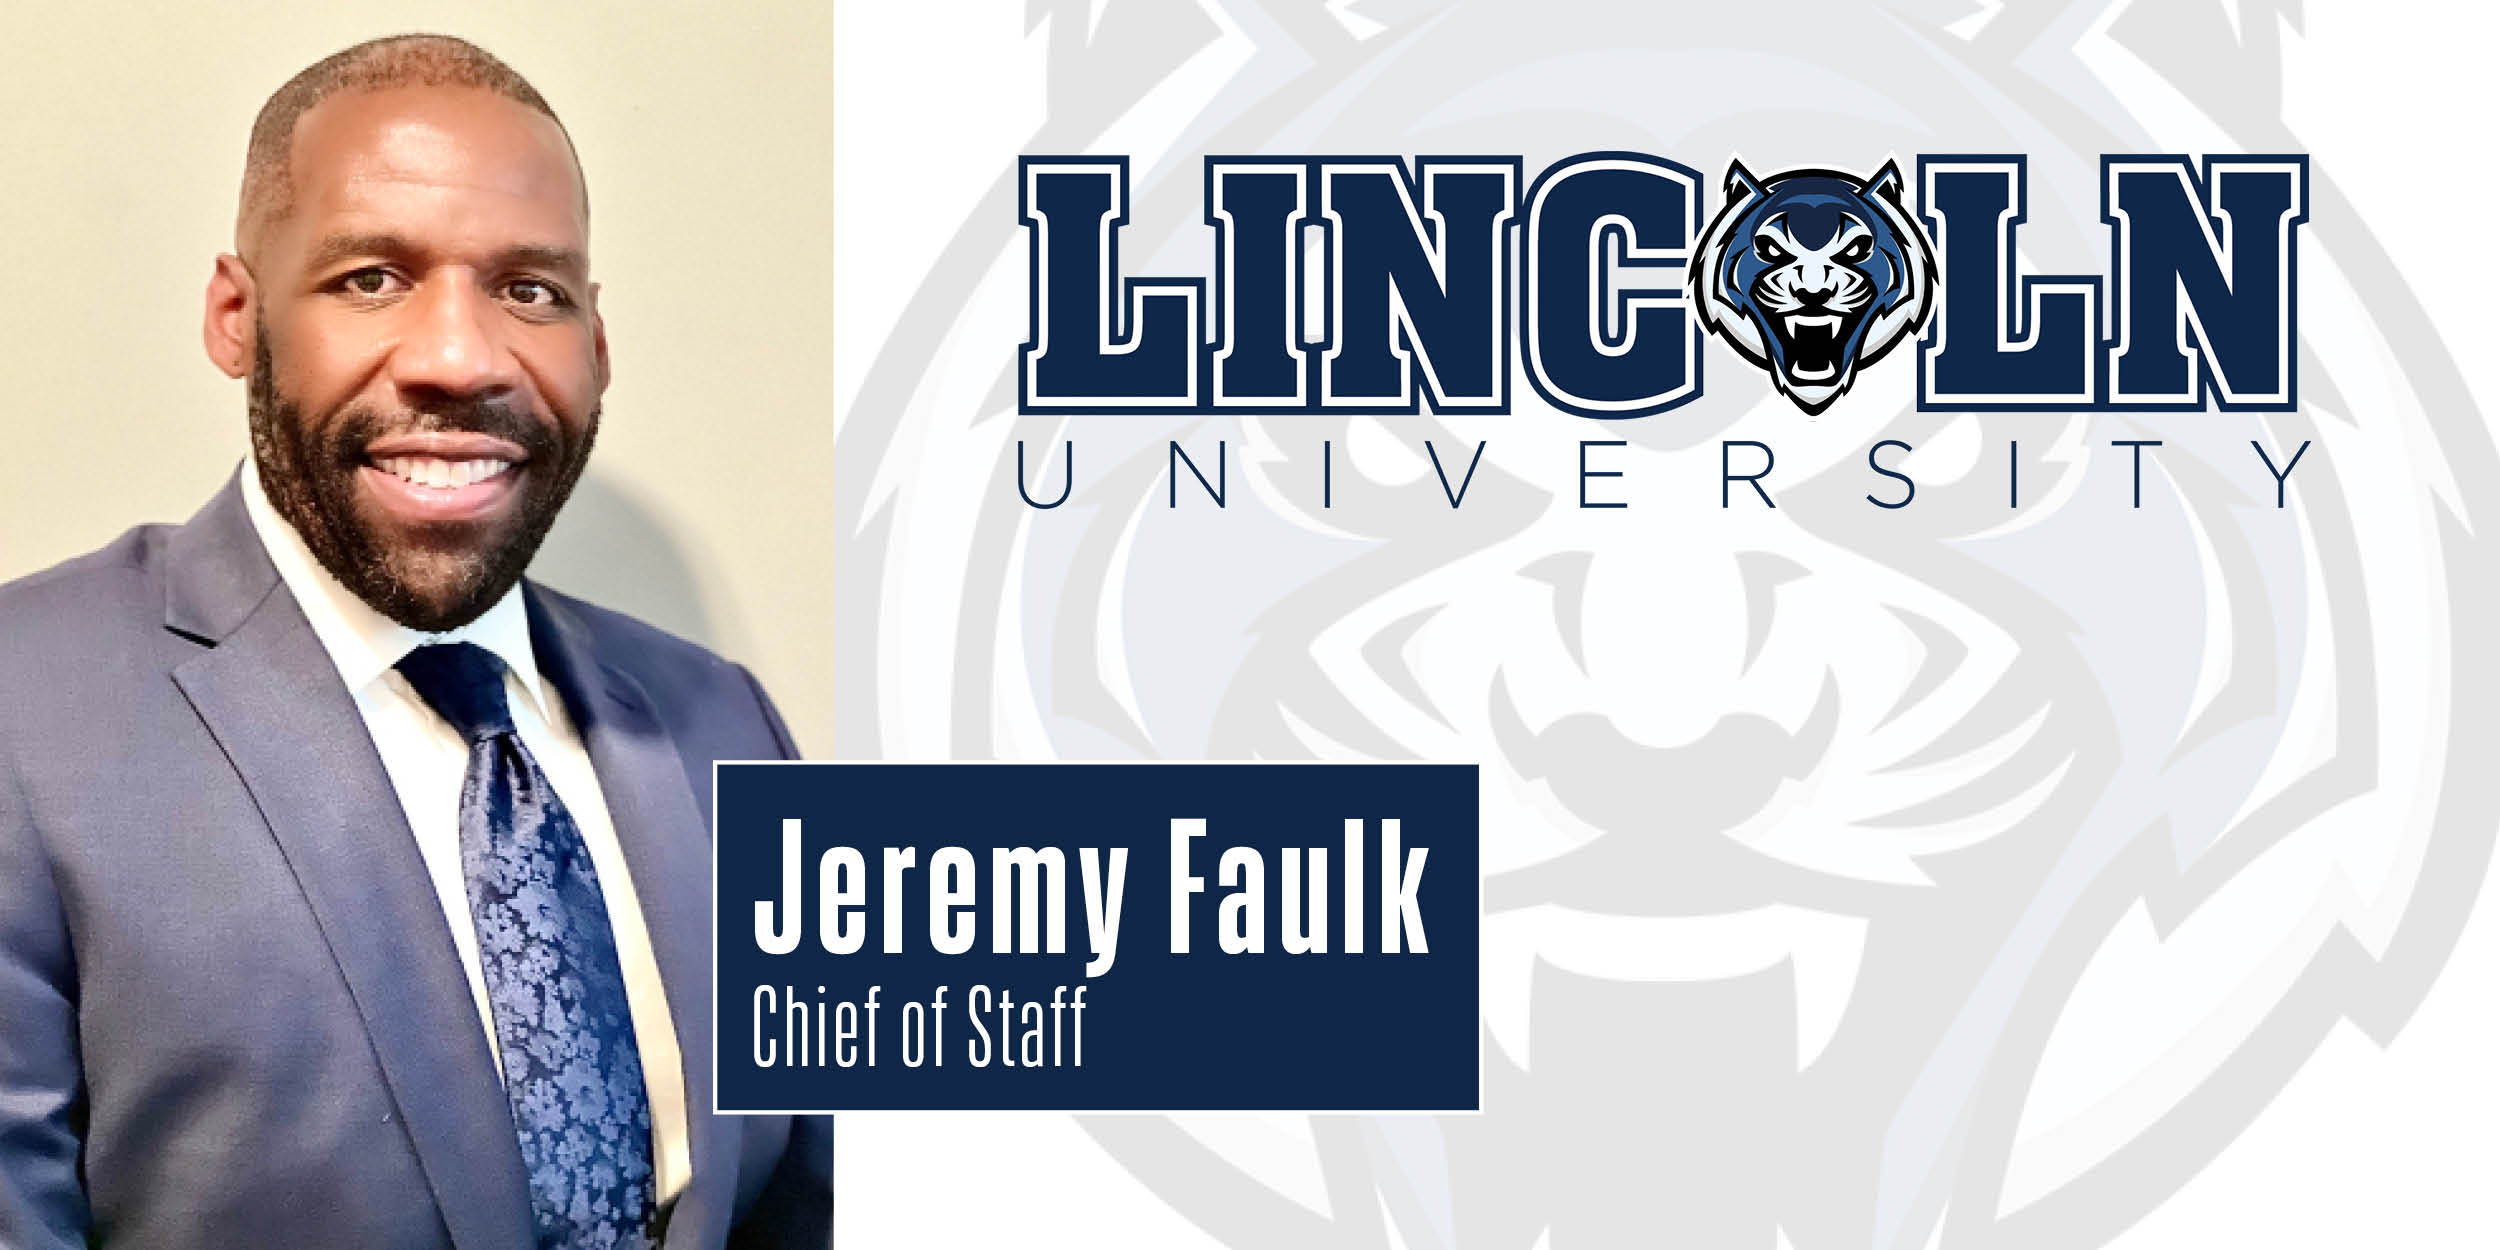 Jeremy Faulk, Chief of Staff